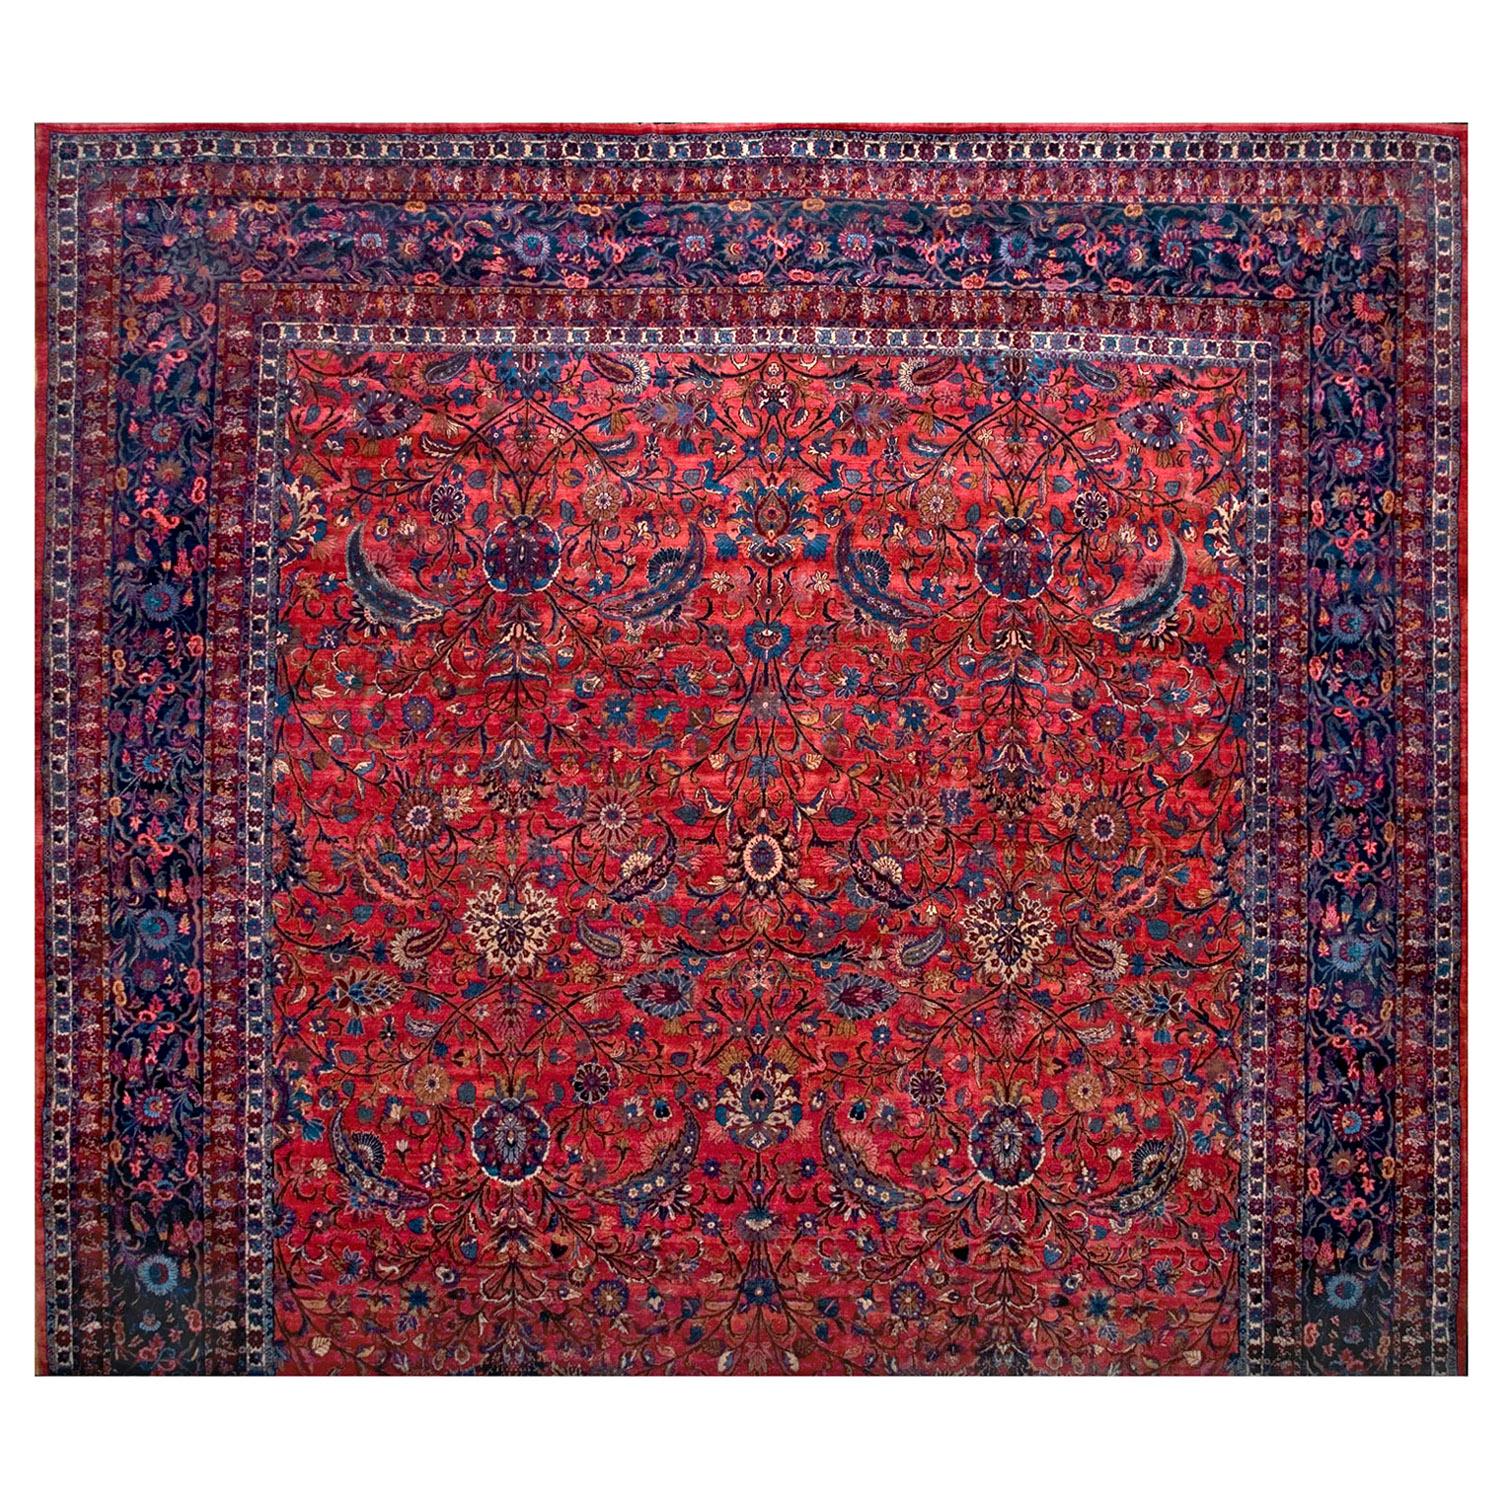 Early 20th Century S.E. Persian Kirman Carpet ( 15' x 30' - 457 x 914 )